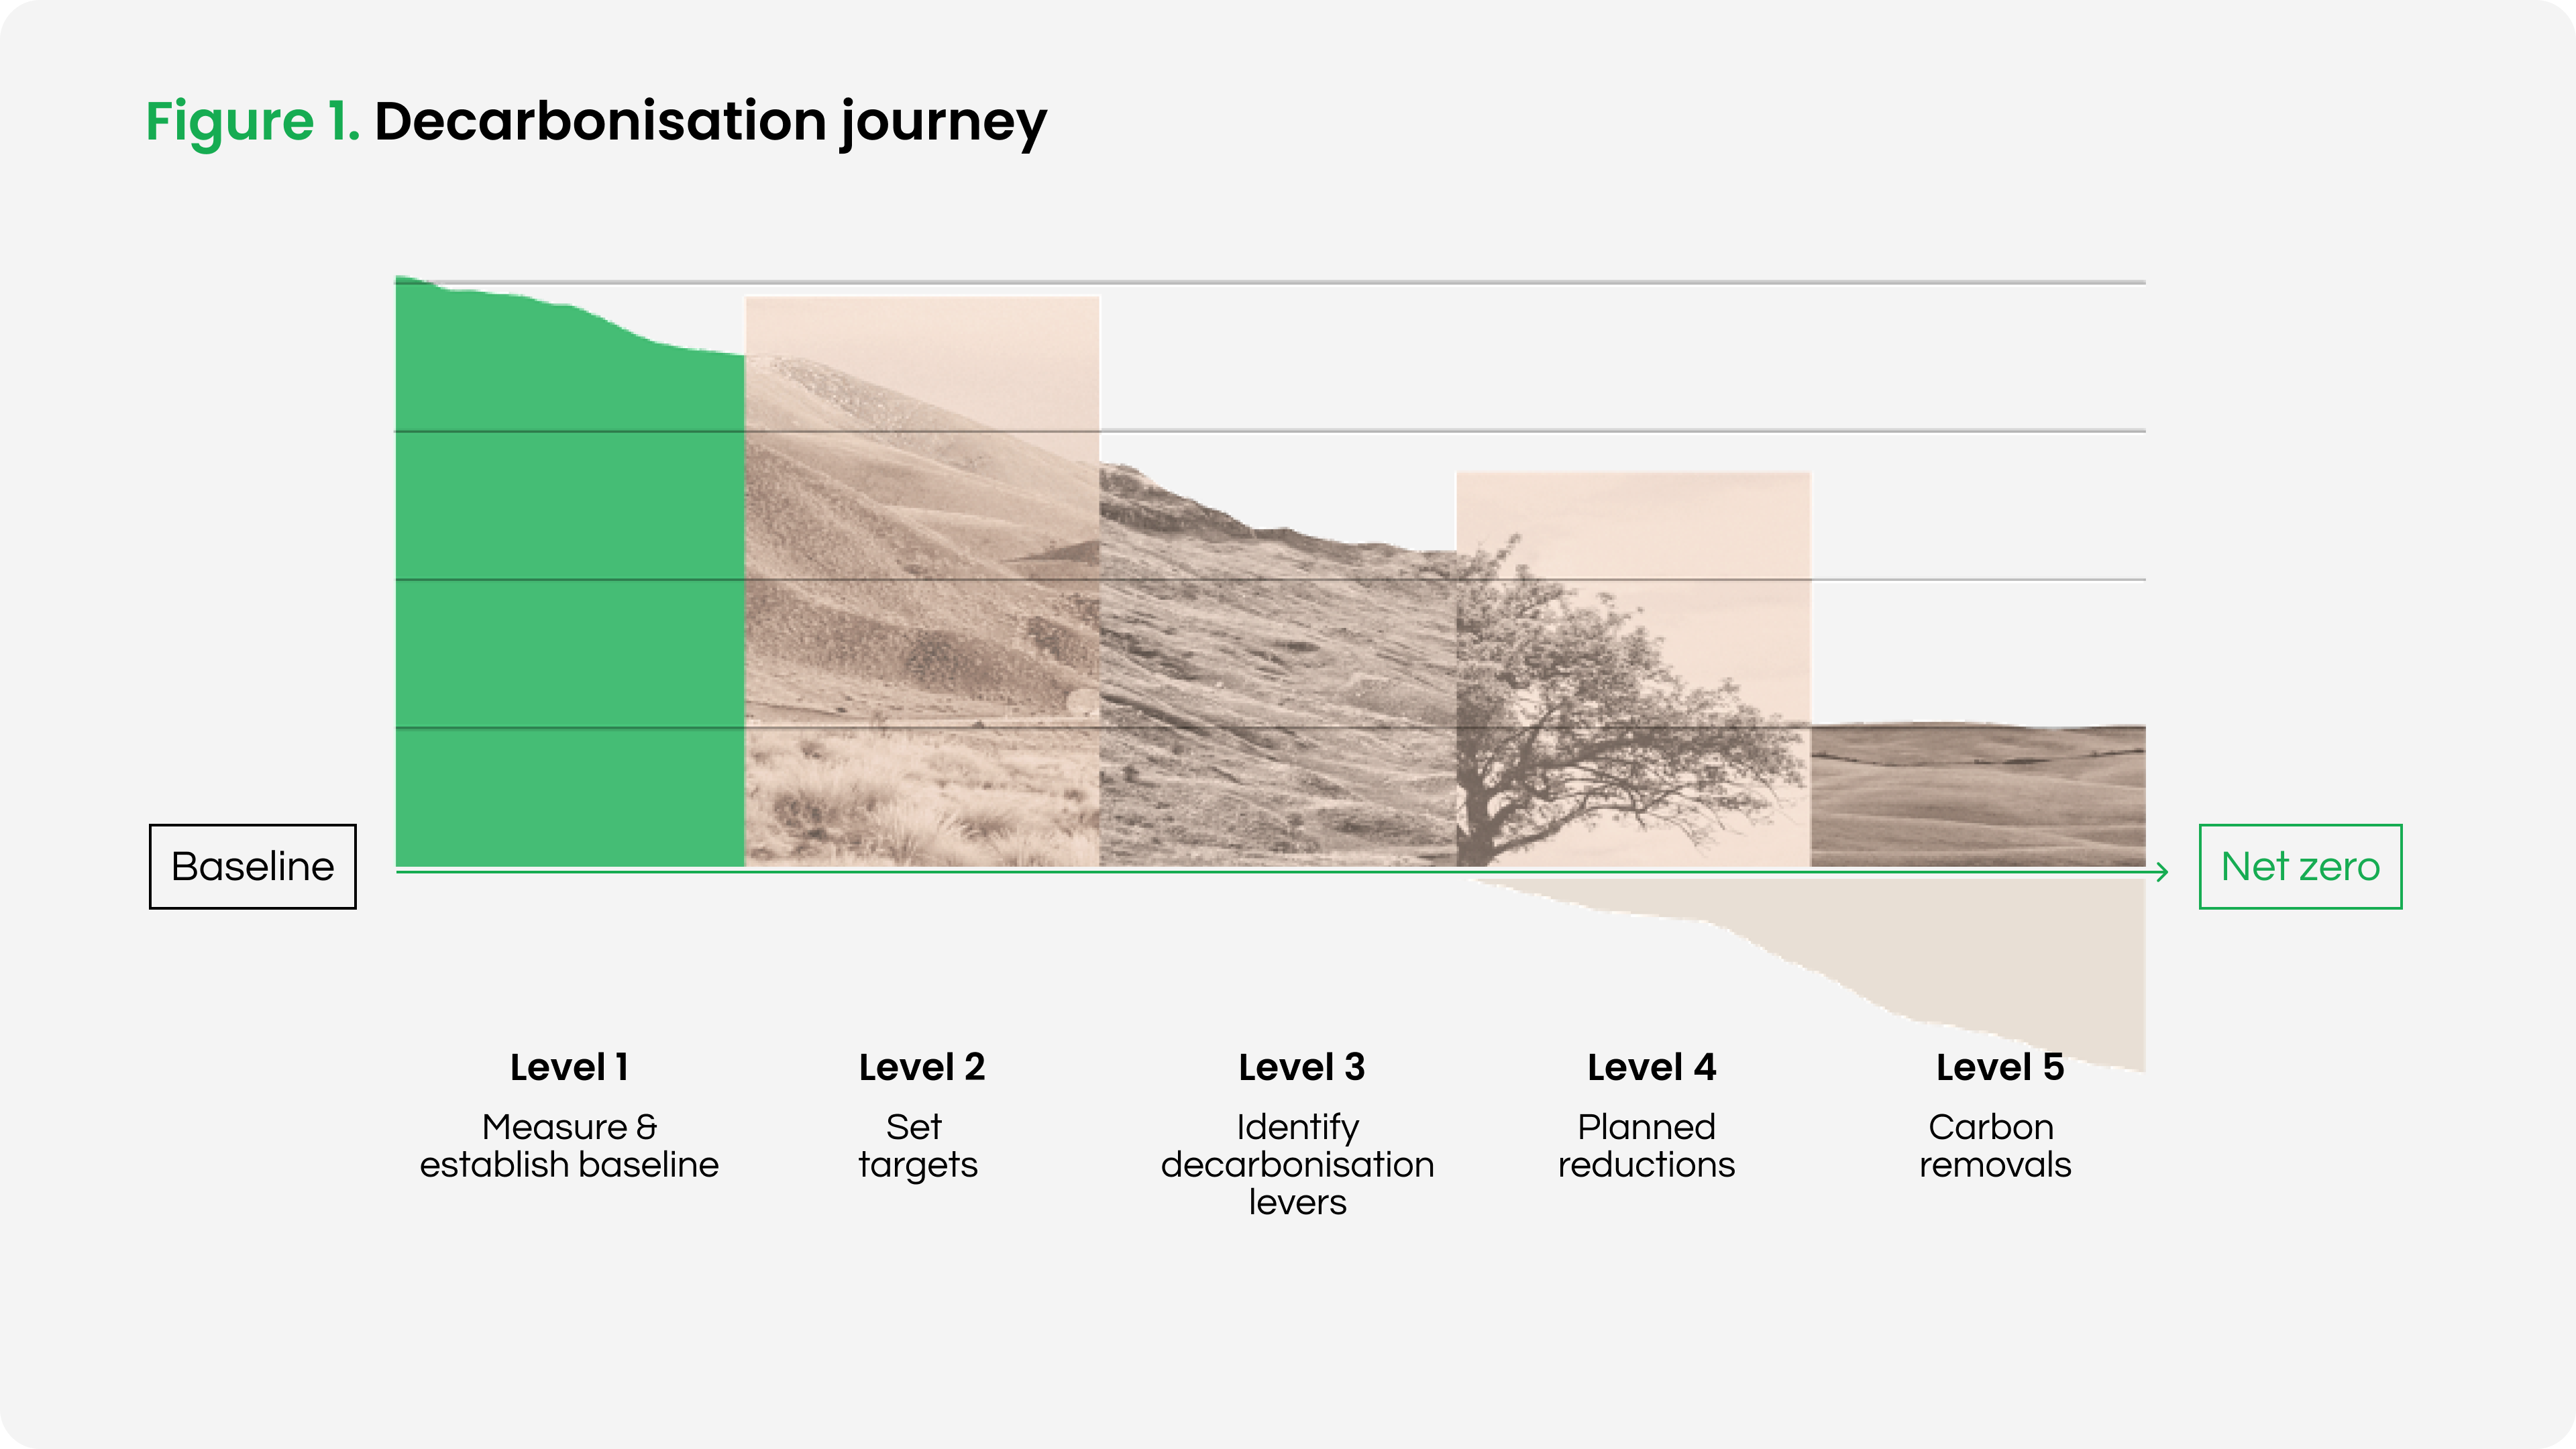 Figure 1 - Decarbonisation journey